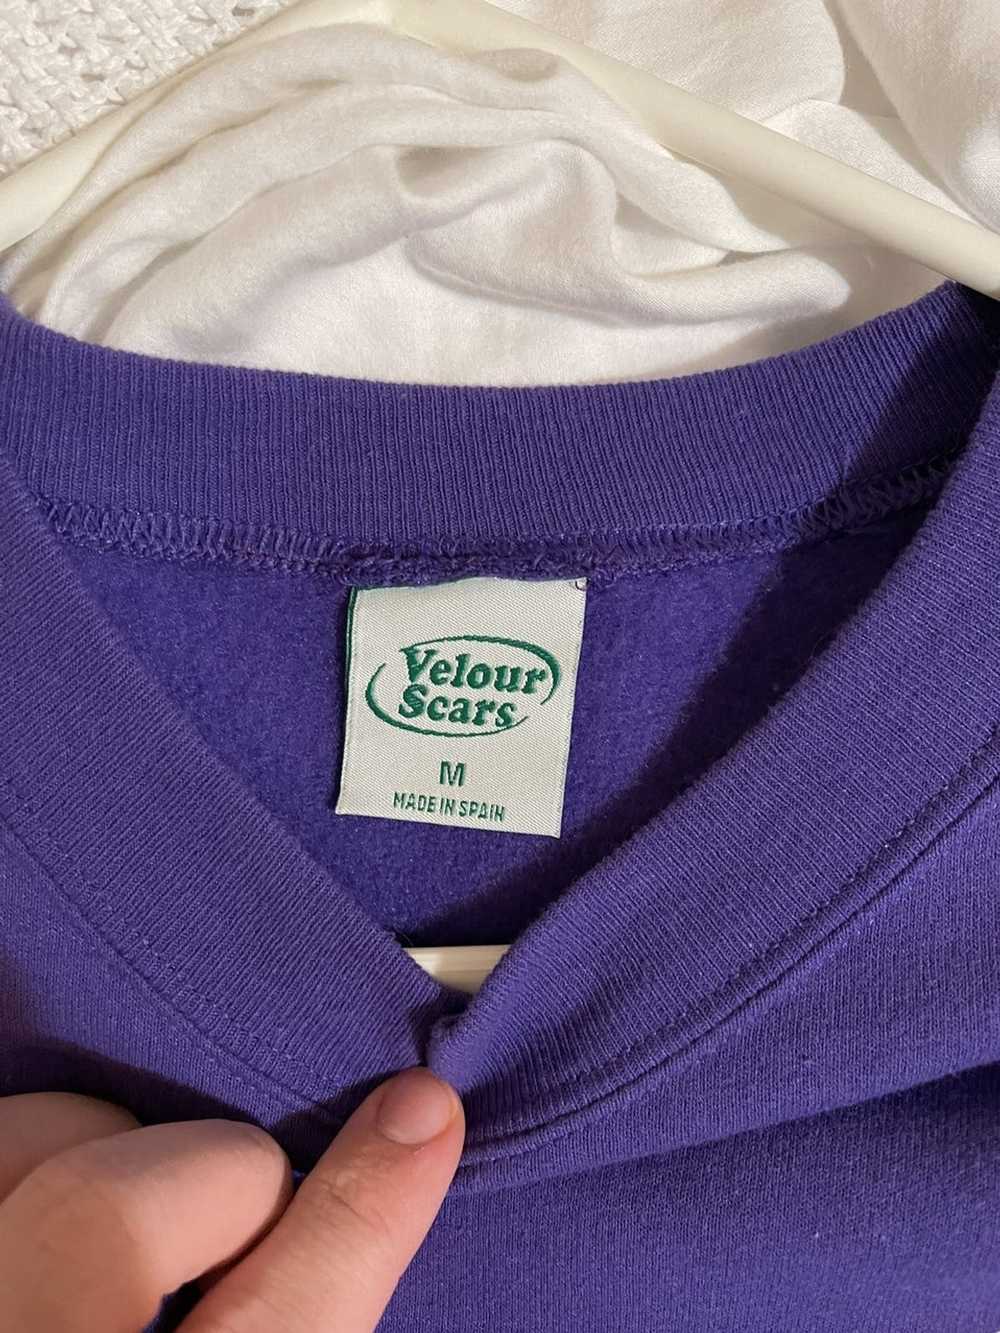 Velour velour scars purple sweatshirt - image 3